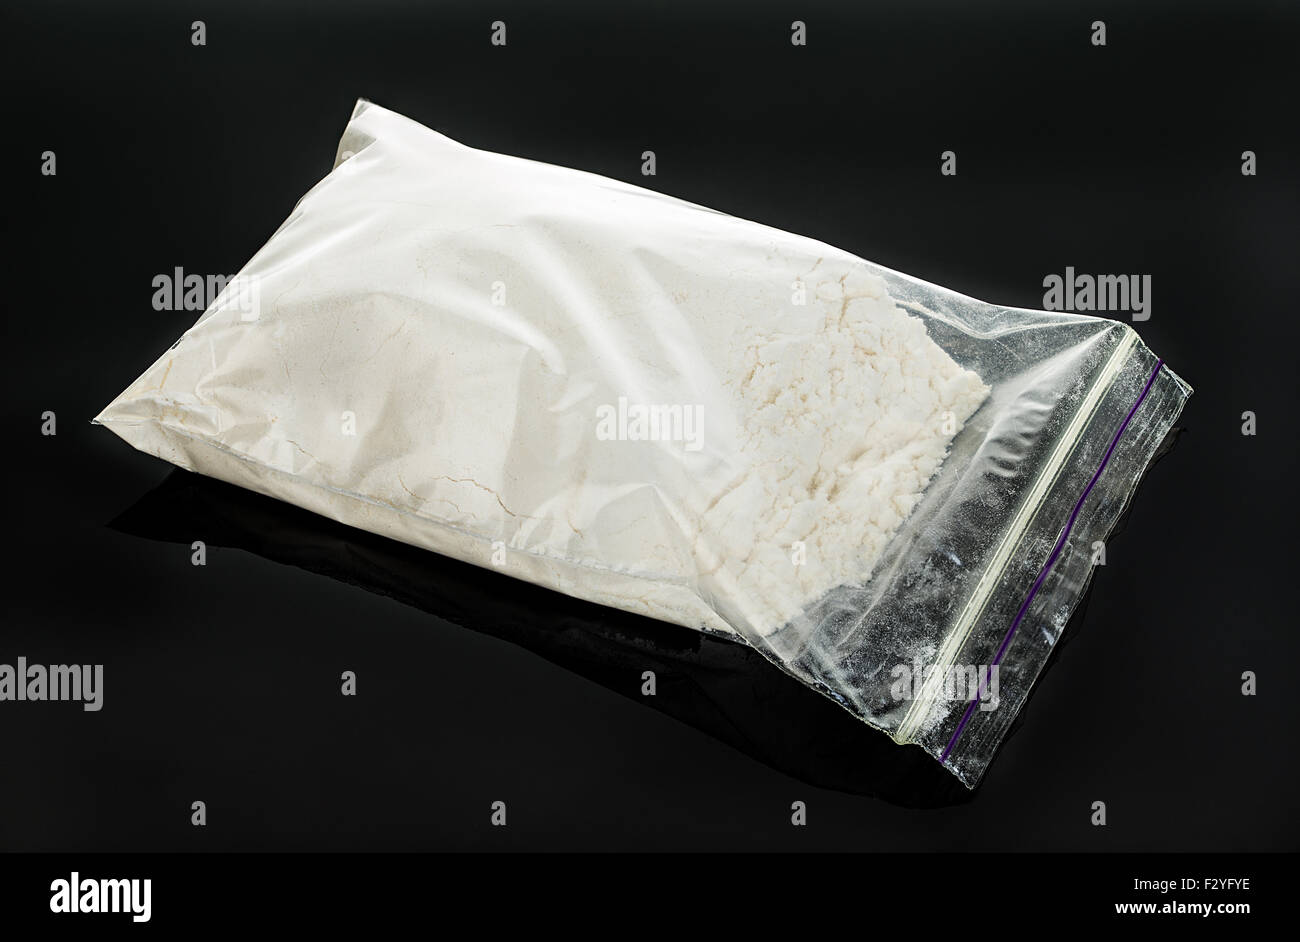 Drug powder close-up on a black background. Stock Photo